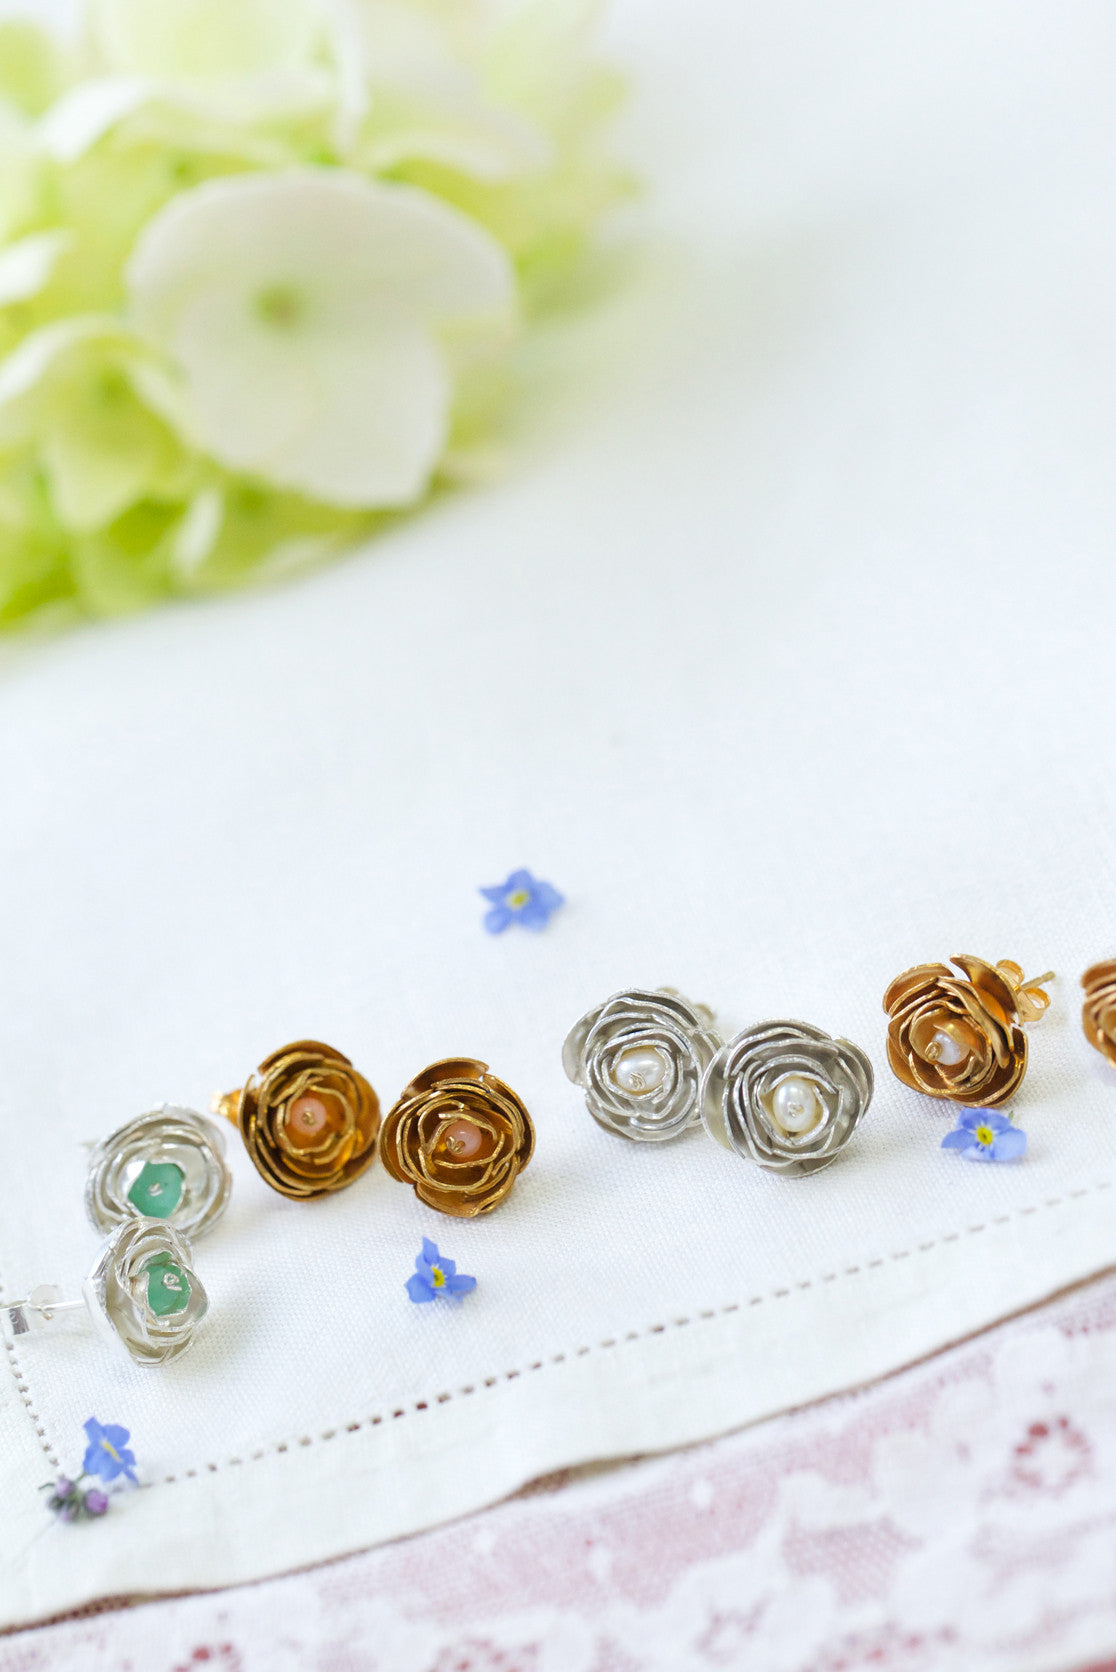 Marquise flower stud earrings - amanda coleman jewellery